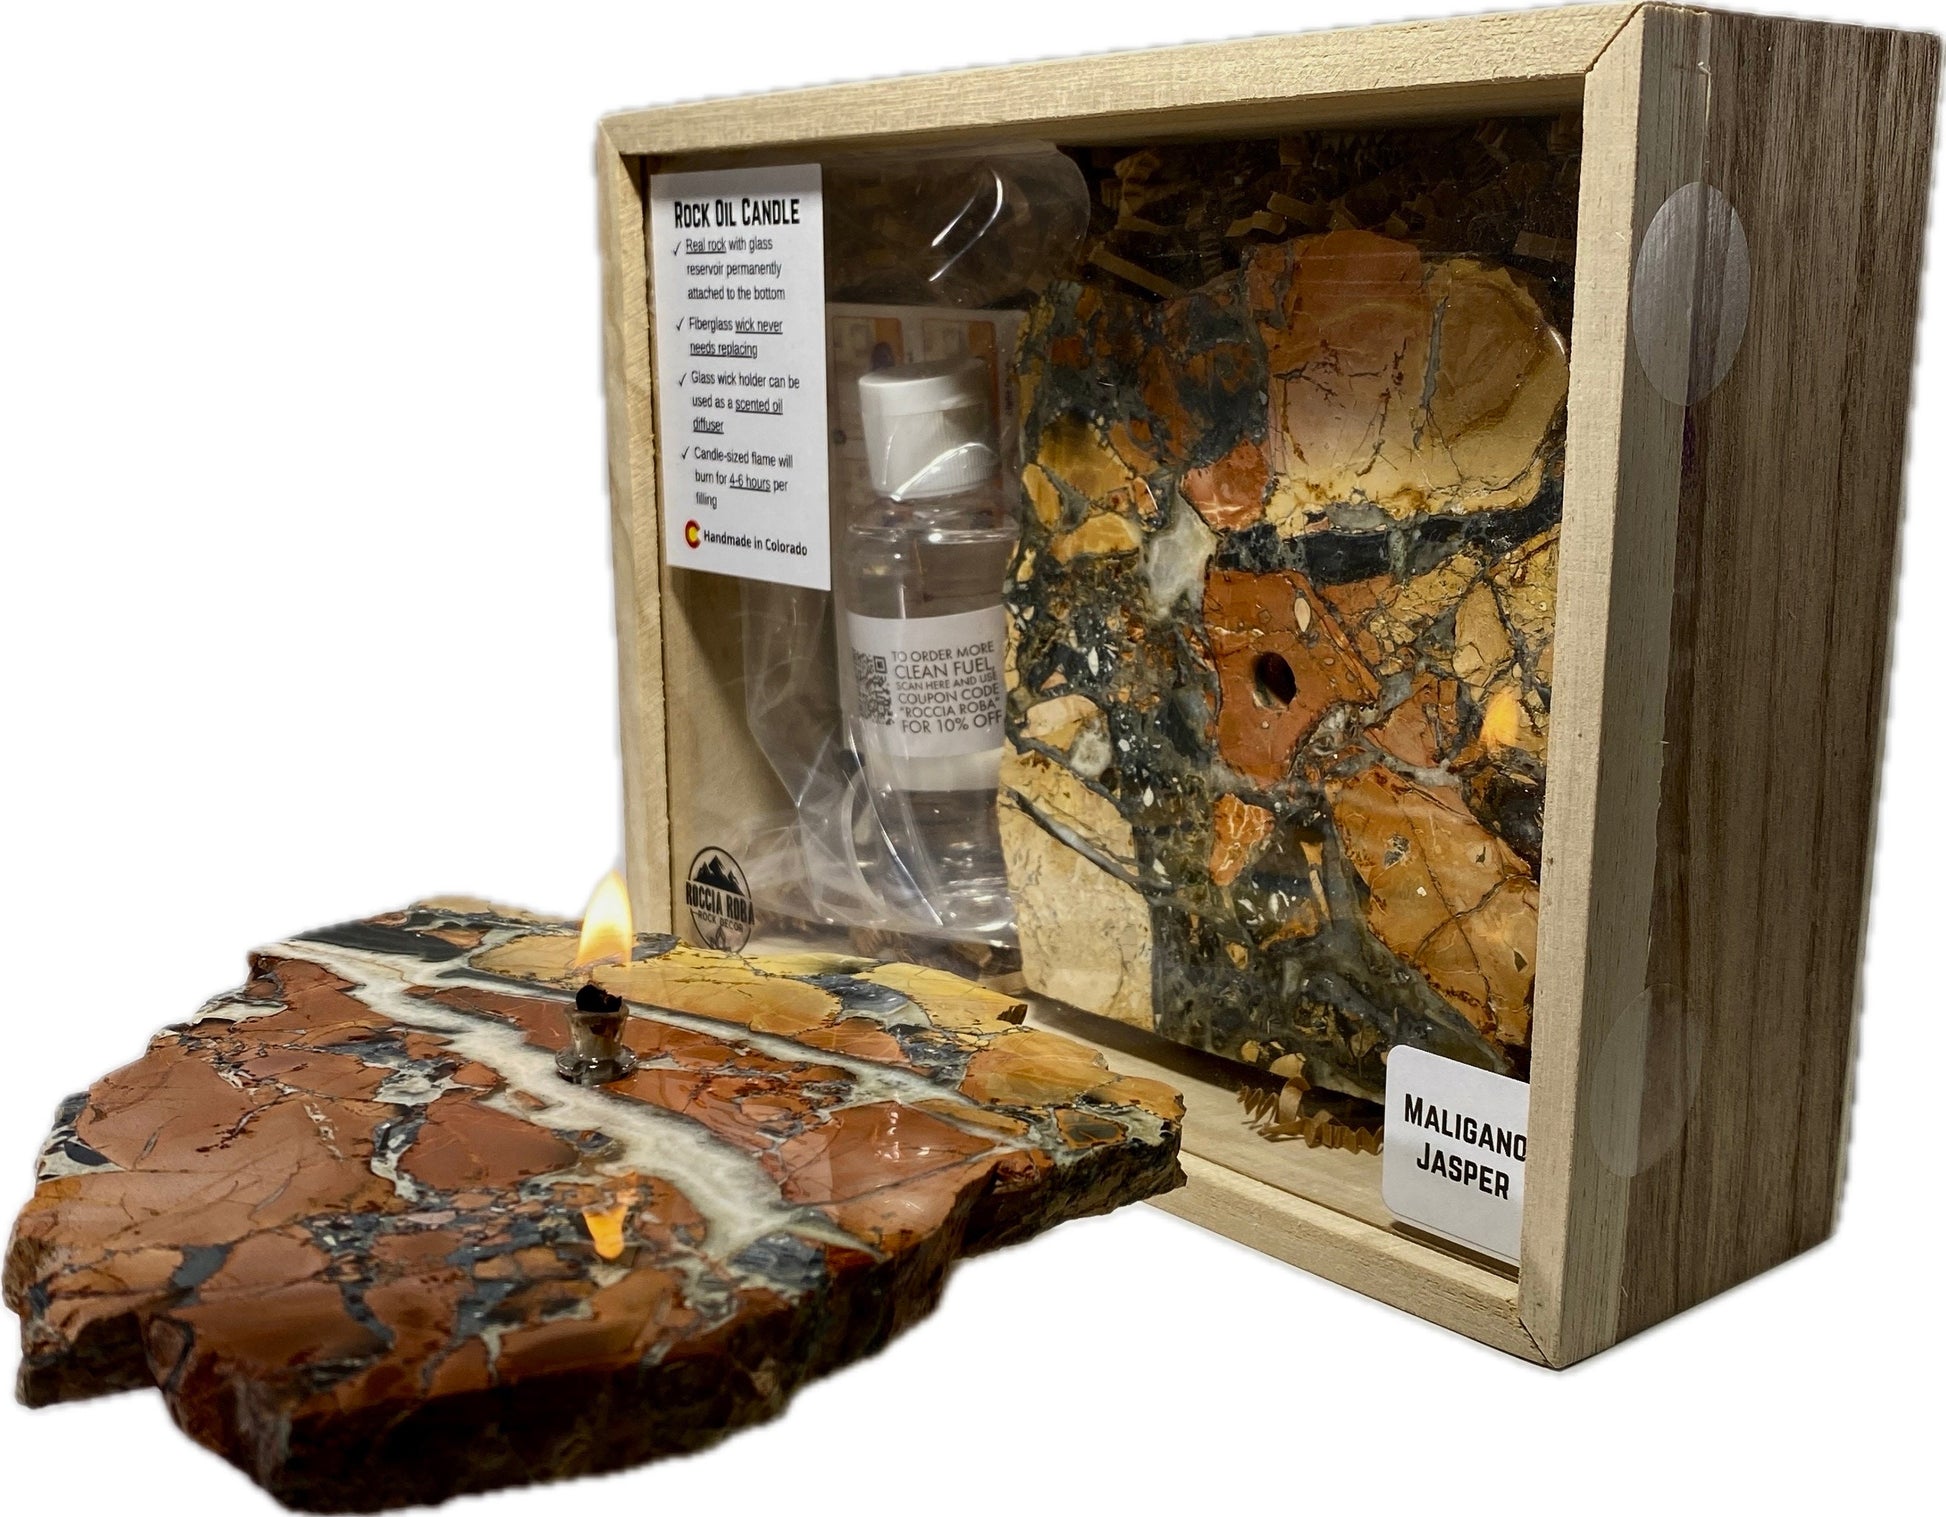 Maligano Jasper Rock Candle gift box | unique rustic decor, rock or candle lover gift, stone oil candle, rock oil lamp, agate candle lamp